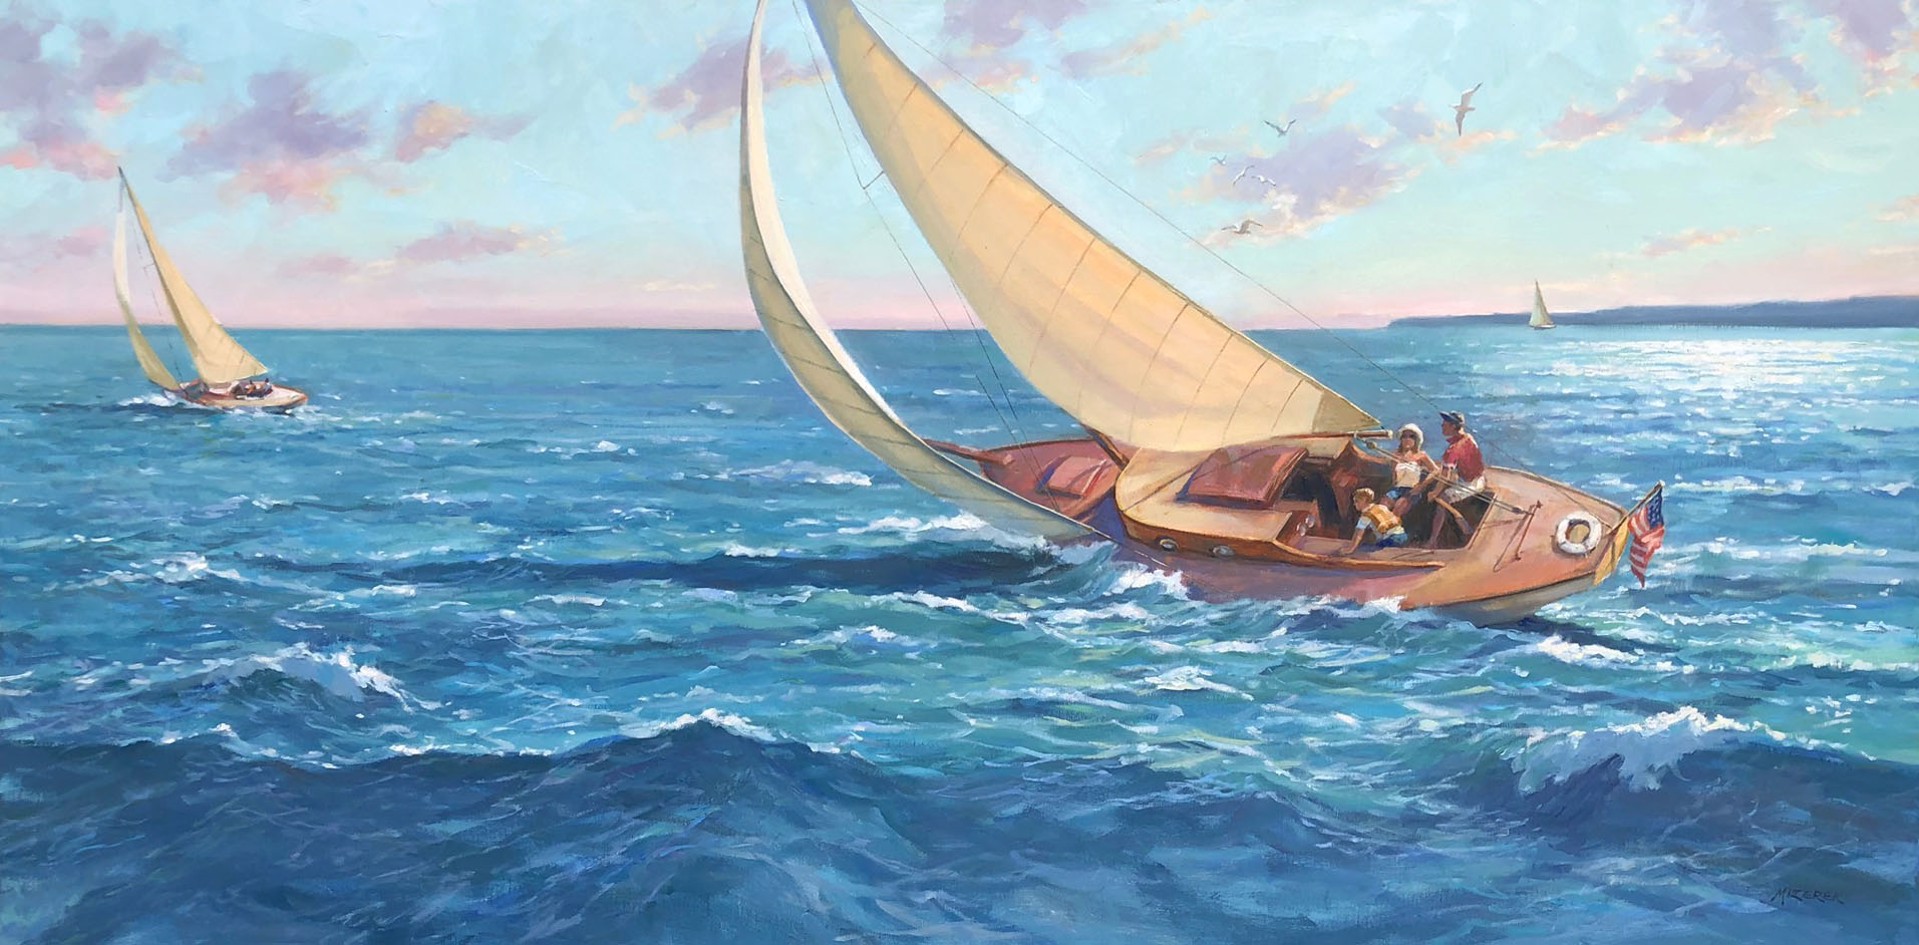 "Day Sail" by Leonard Mizerek